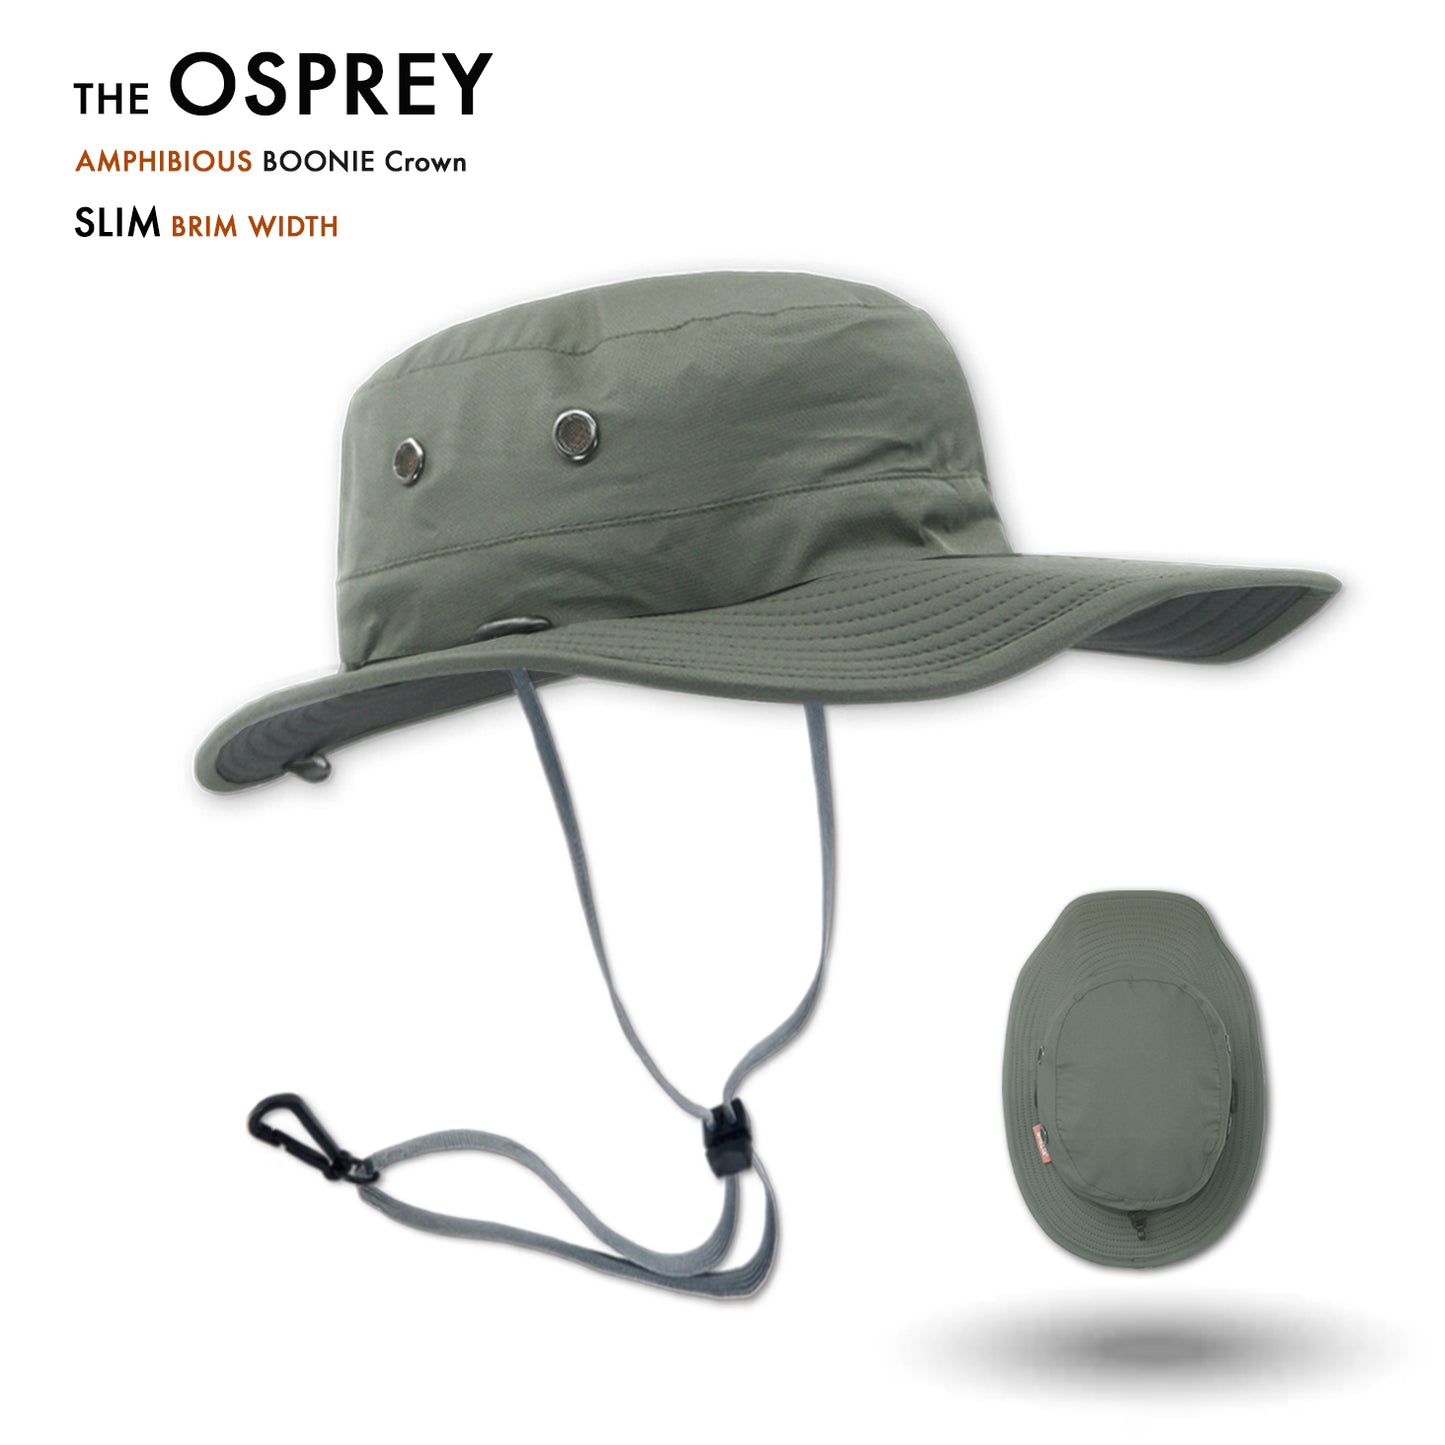 The Shelta Osprey Slim Brim Amphibious Boonie Crown Sun Hat